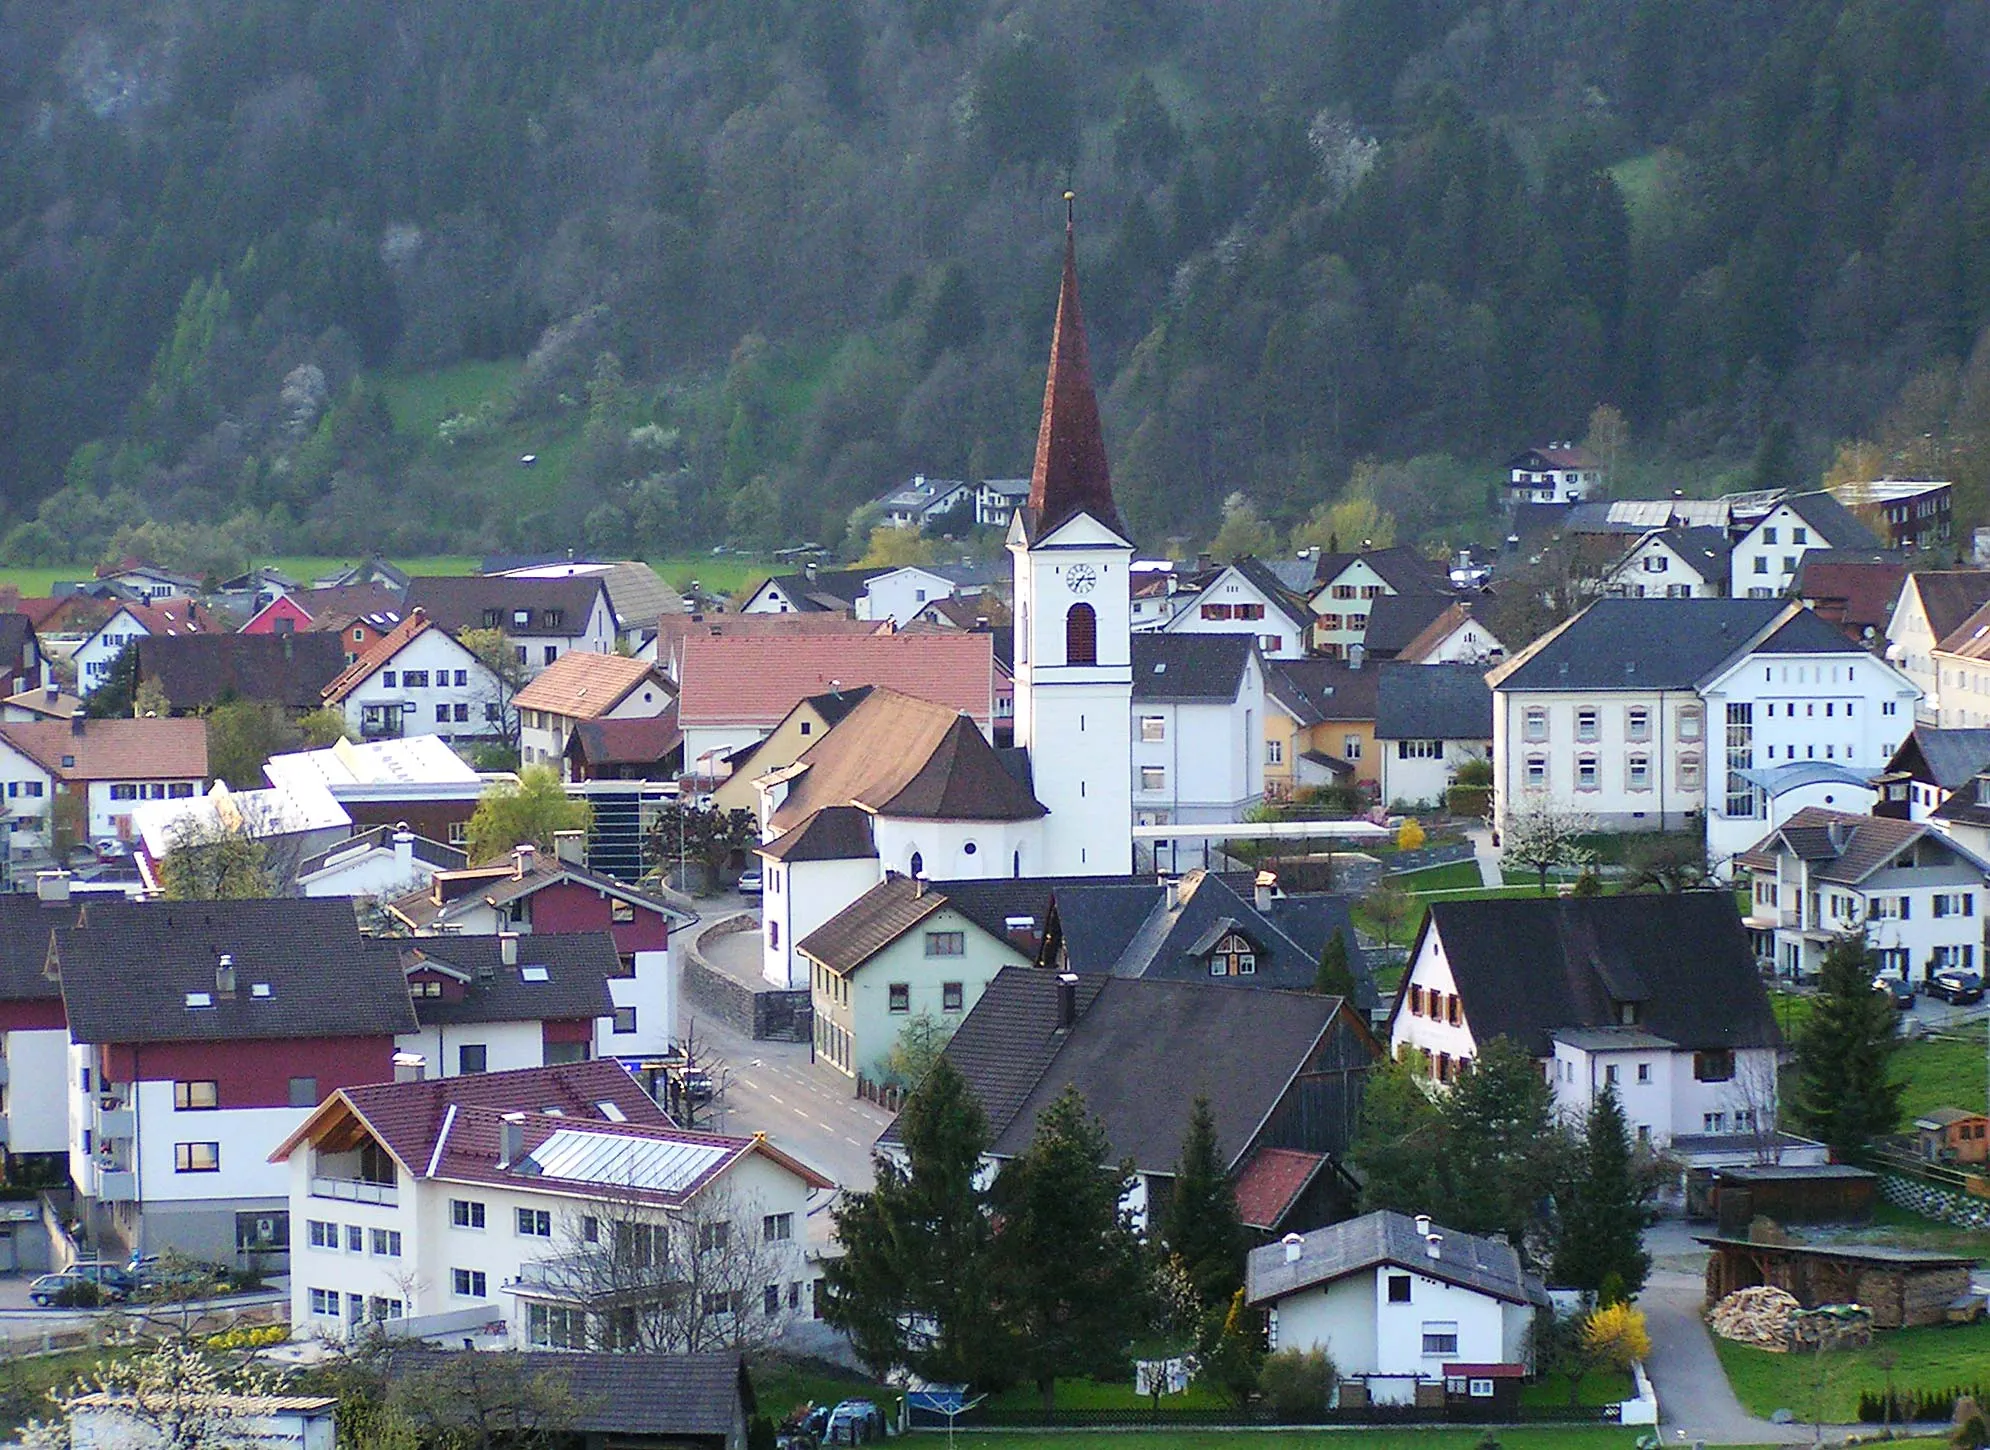 Image de Vorarlberg